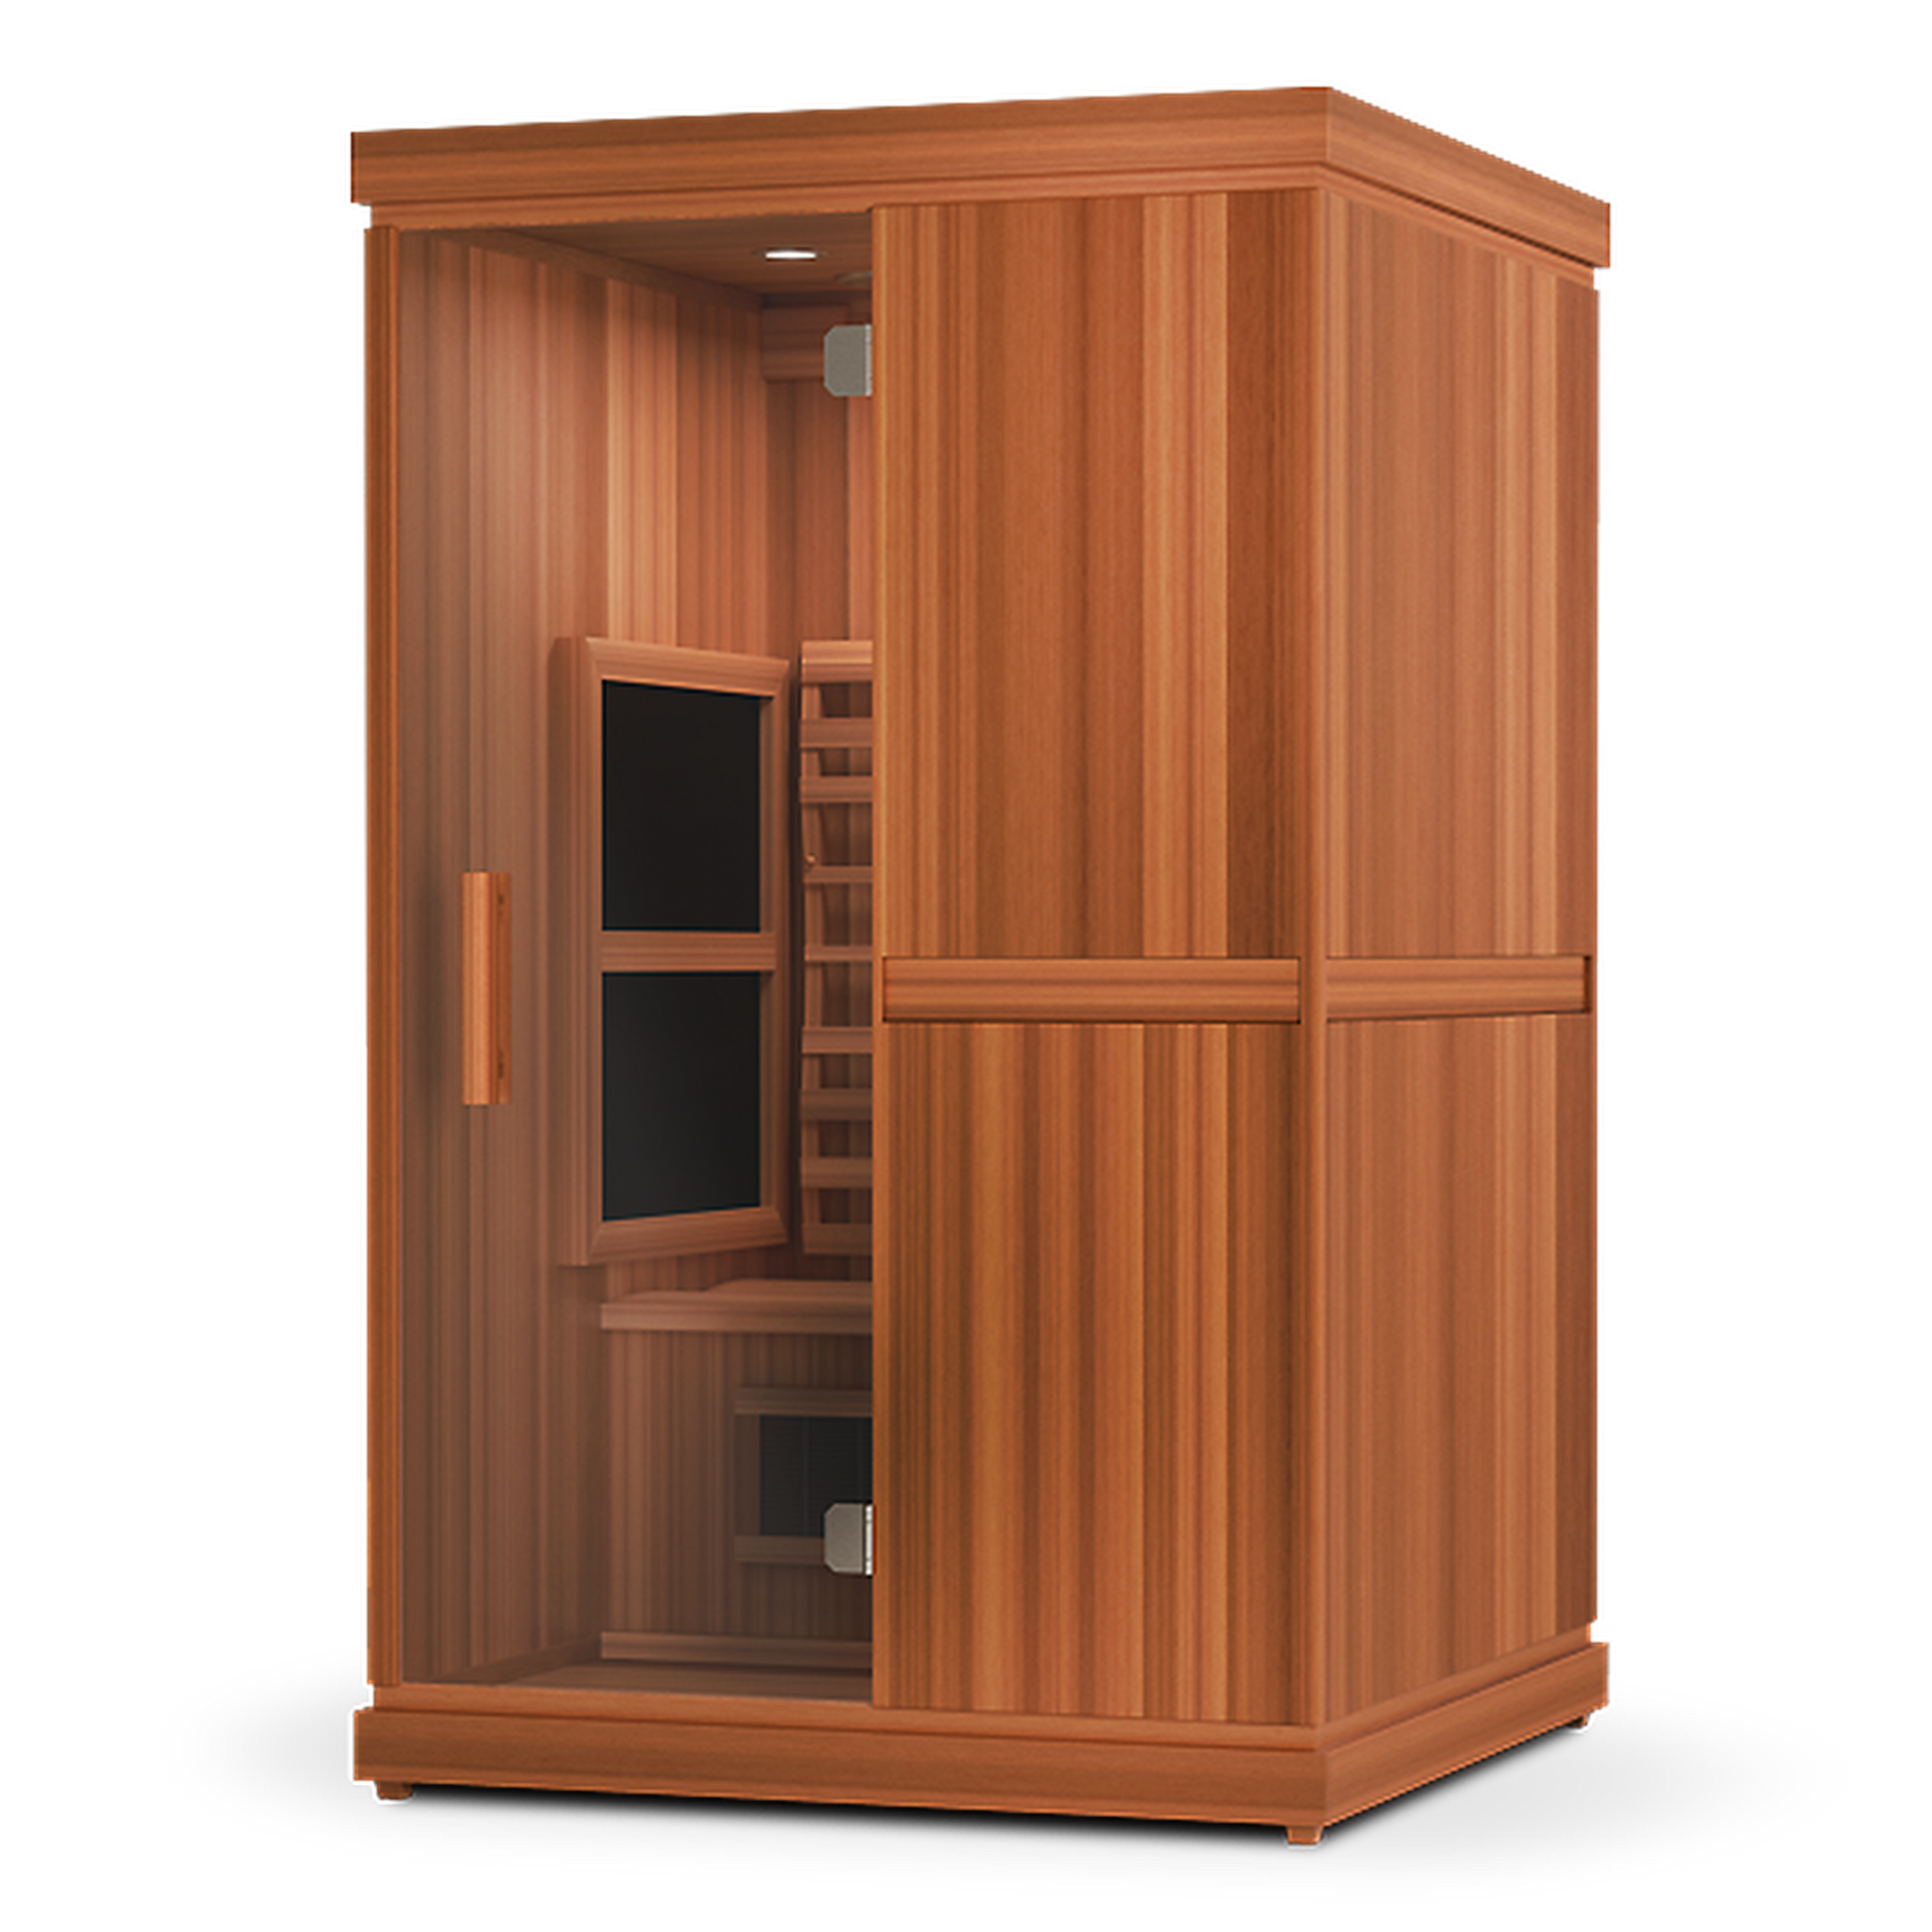 Finnmark Designs FD-2 Hybrid 2.0 Full Spectrum 48" 2-Person Home Infrared Sauna